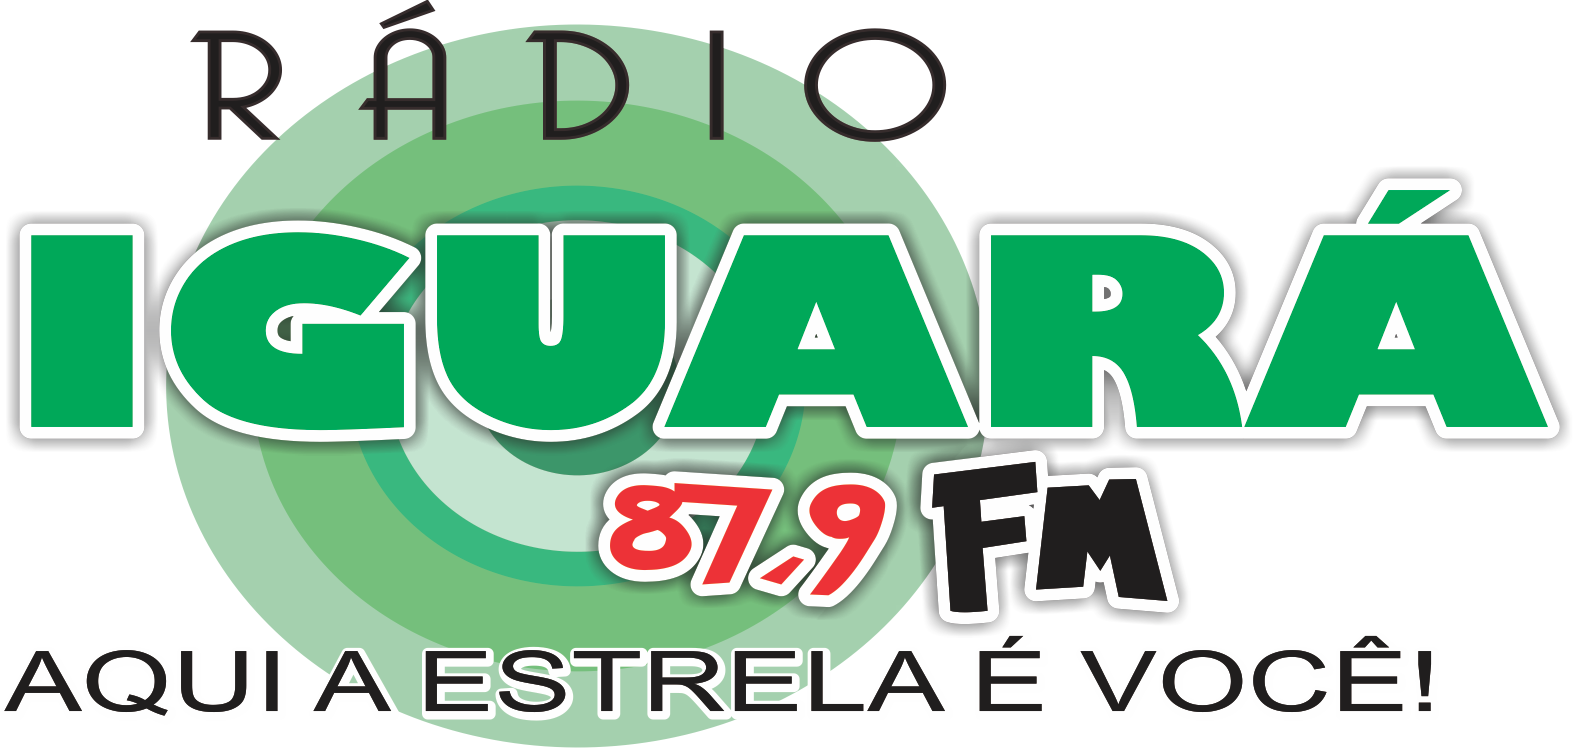 Rádio Iguará Fm 87,9